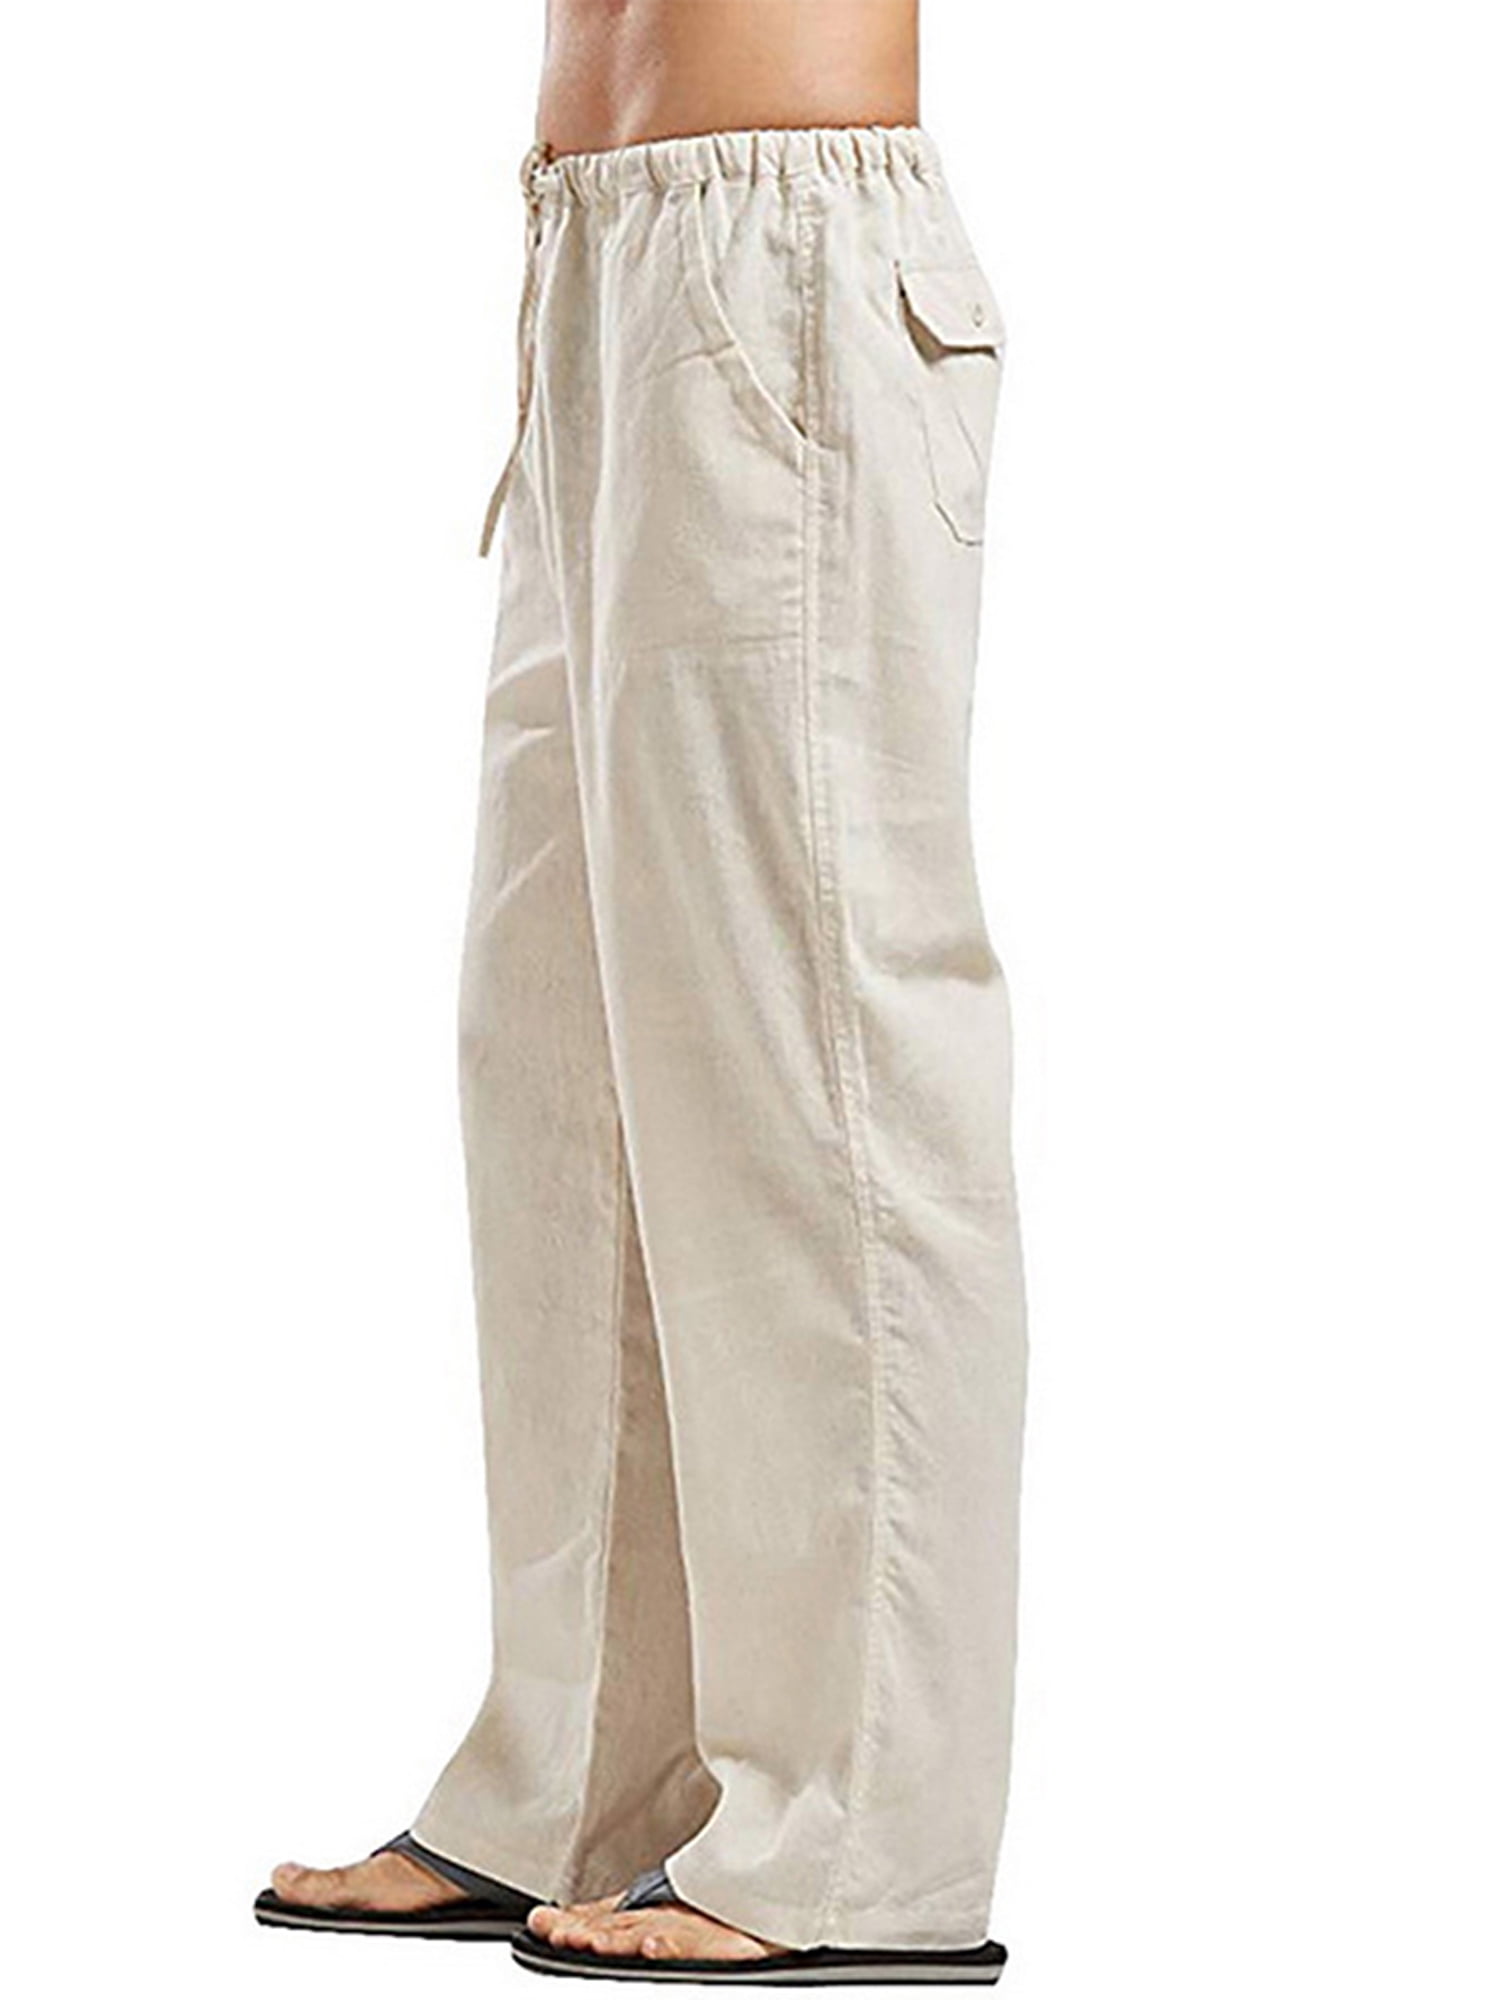 JINIDU Mens Linen Trousers Loose Casual Elastic Drawstring Yoga Beach Pants 